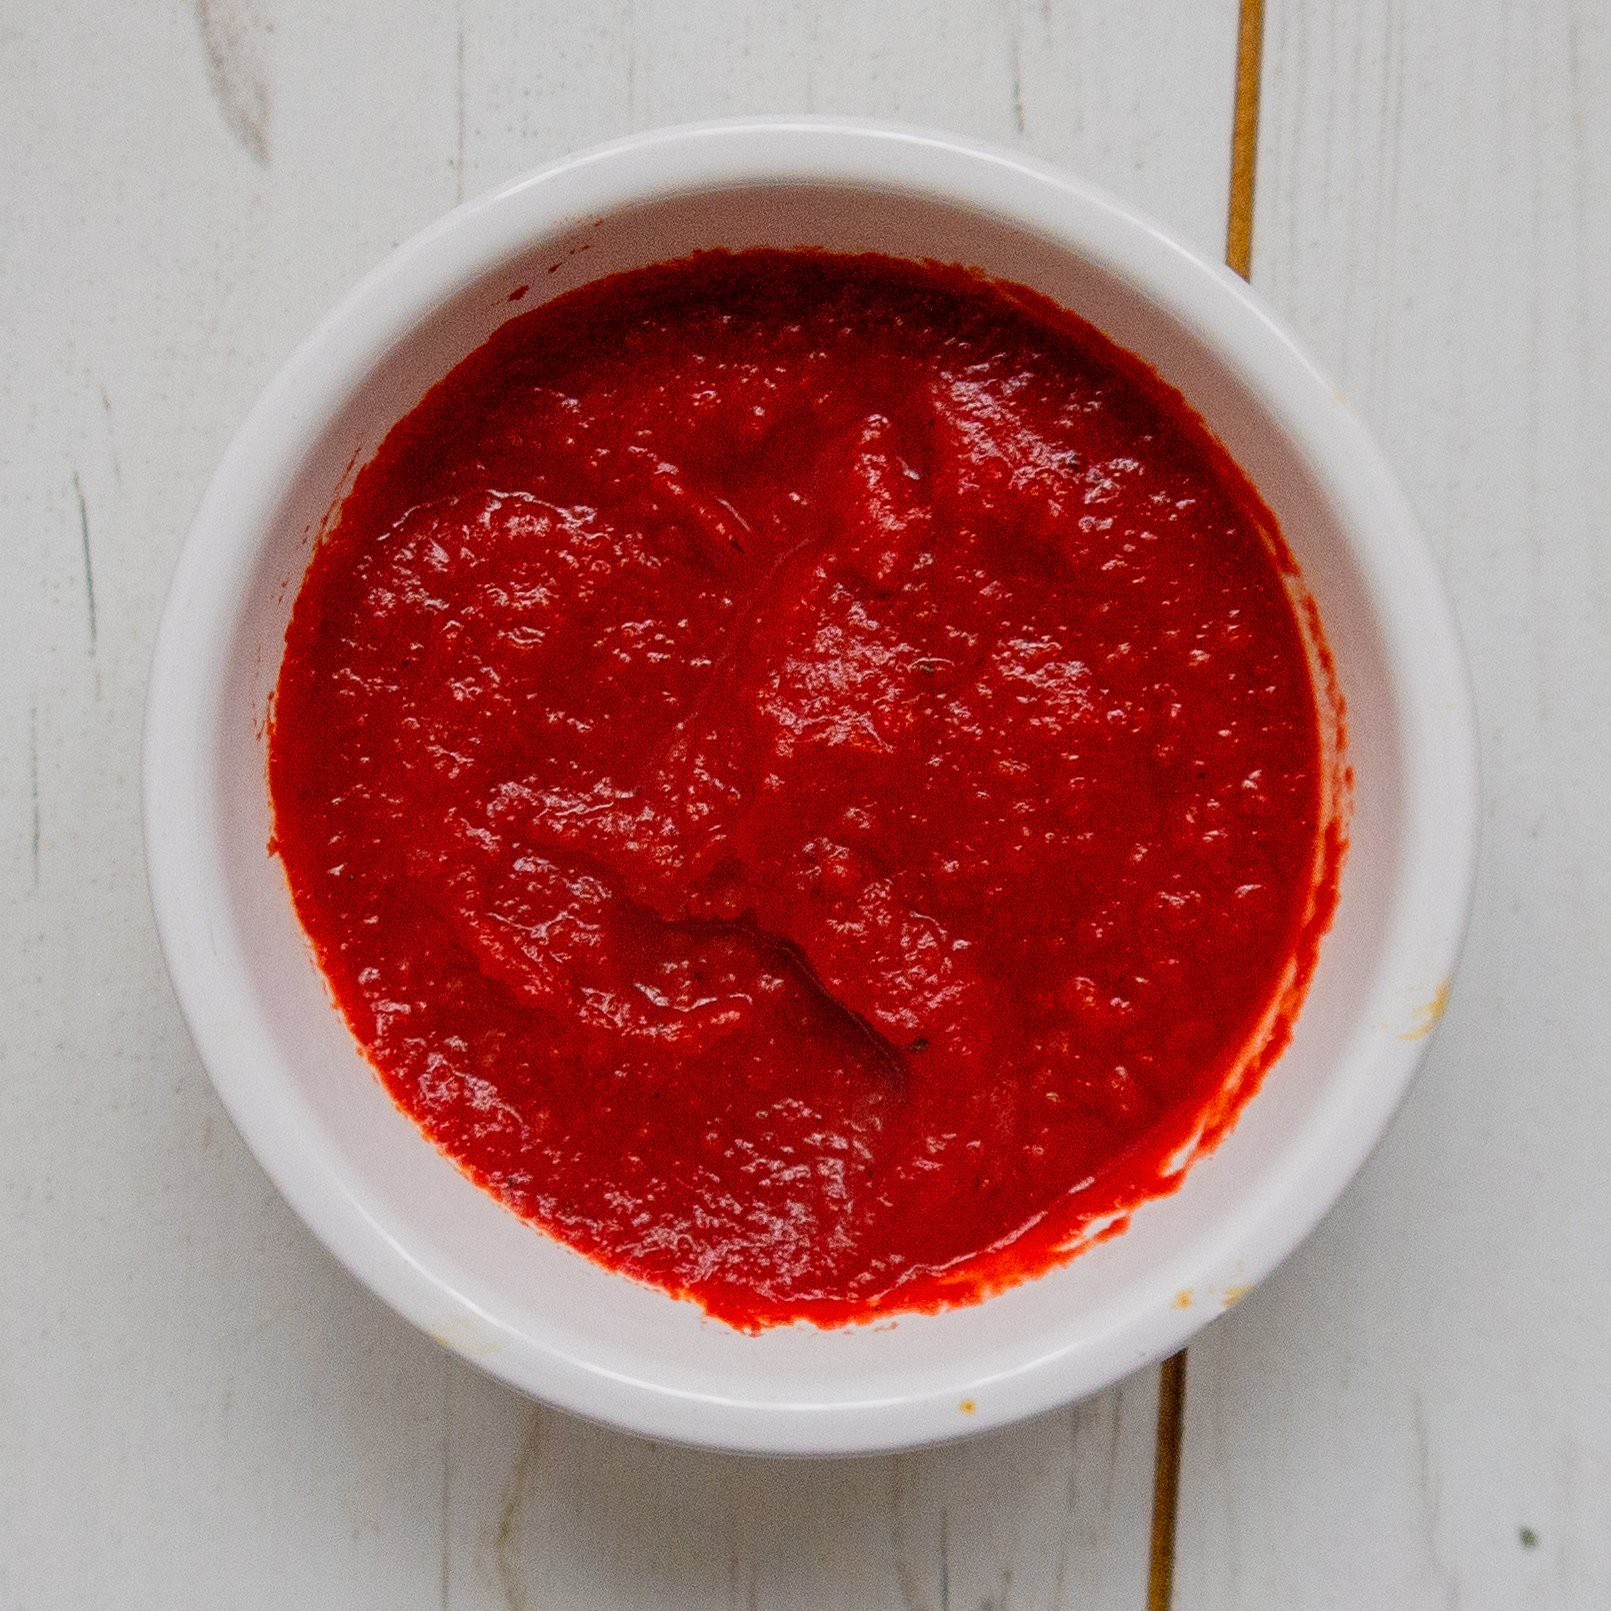 simple homemade salsas  by kam sokhi allergy chef 